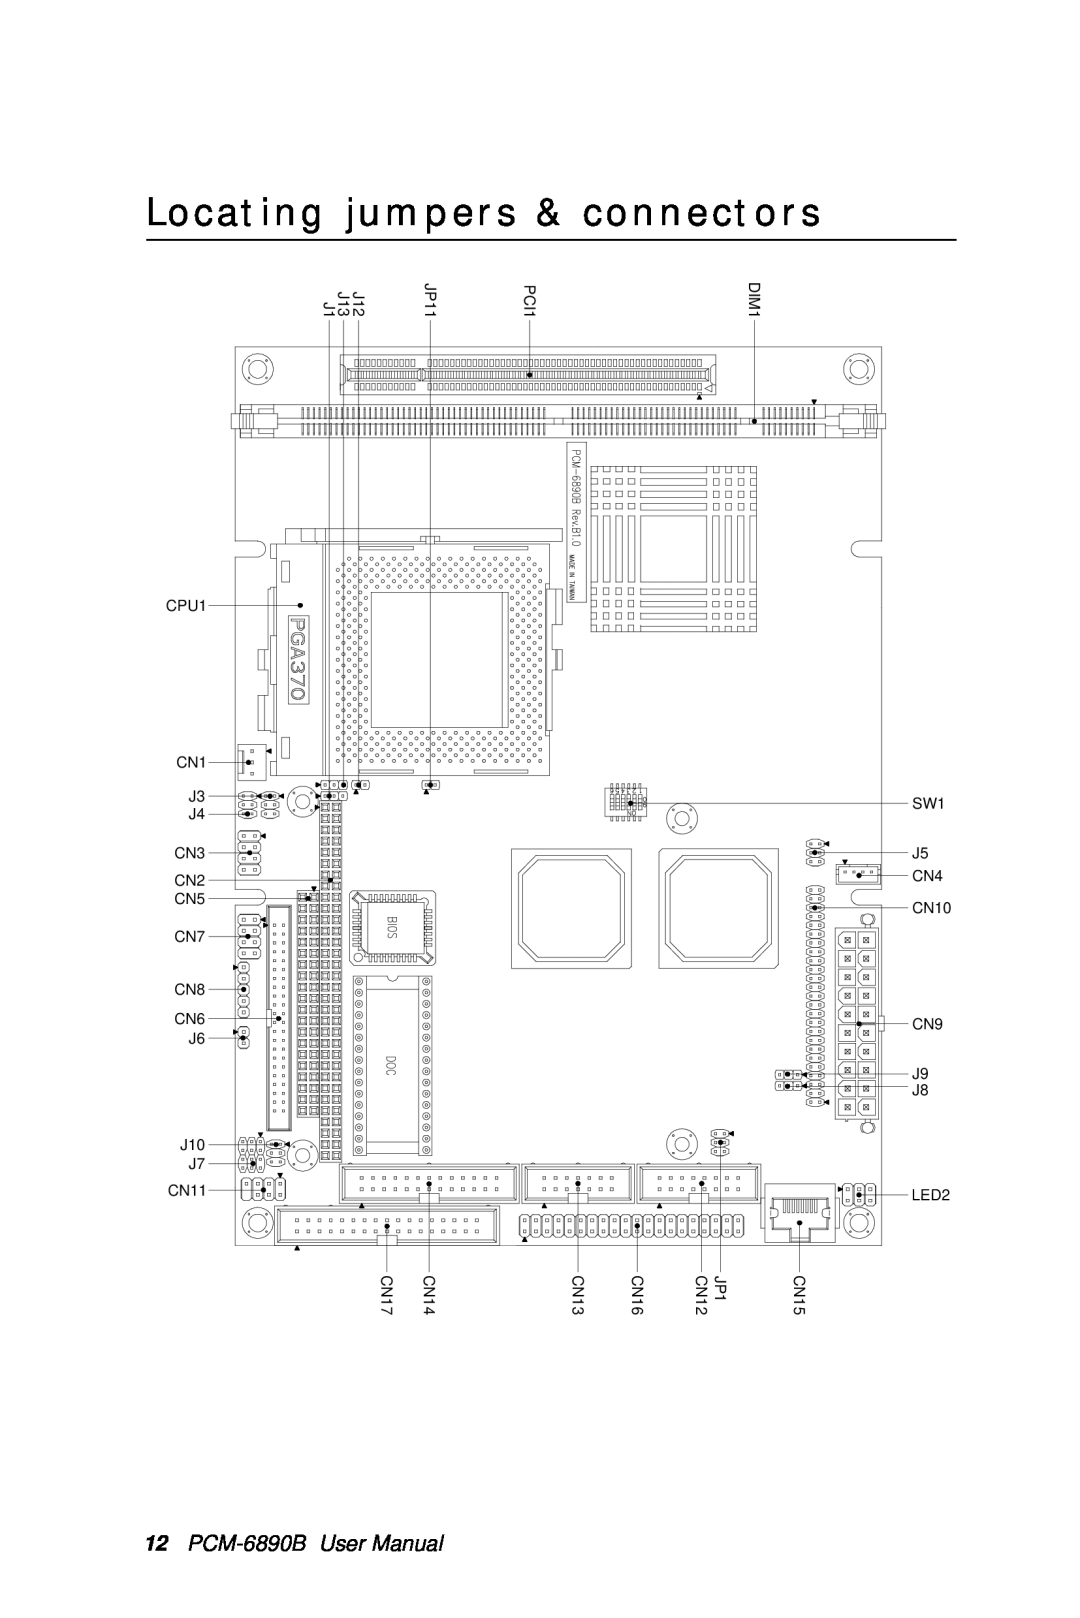 IBM All-in-One FC/Socket 370 Celeron manual Locating jumpers & connectors, PCM-6890B User Manual 